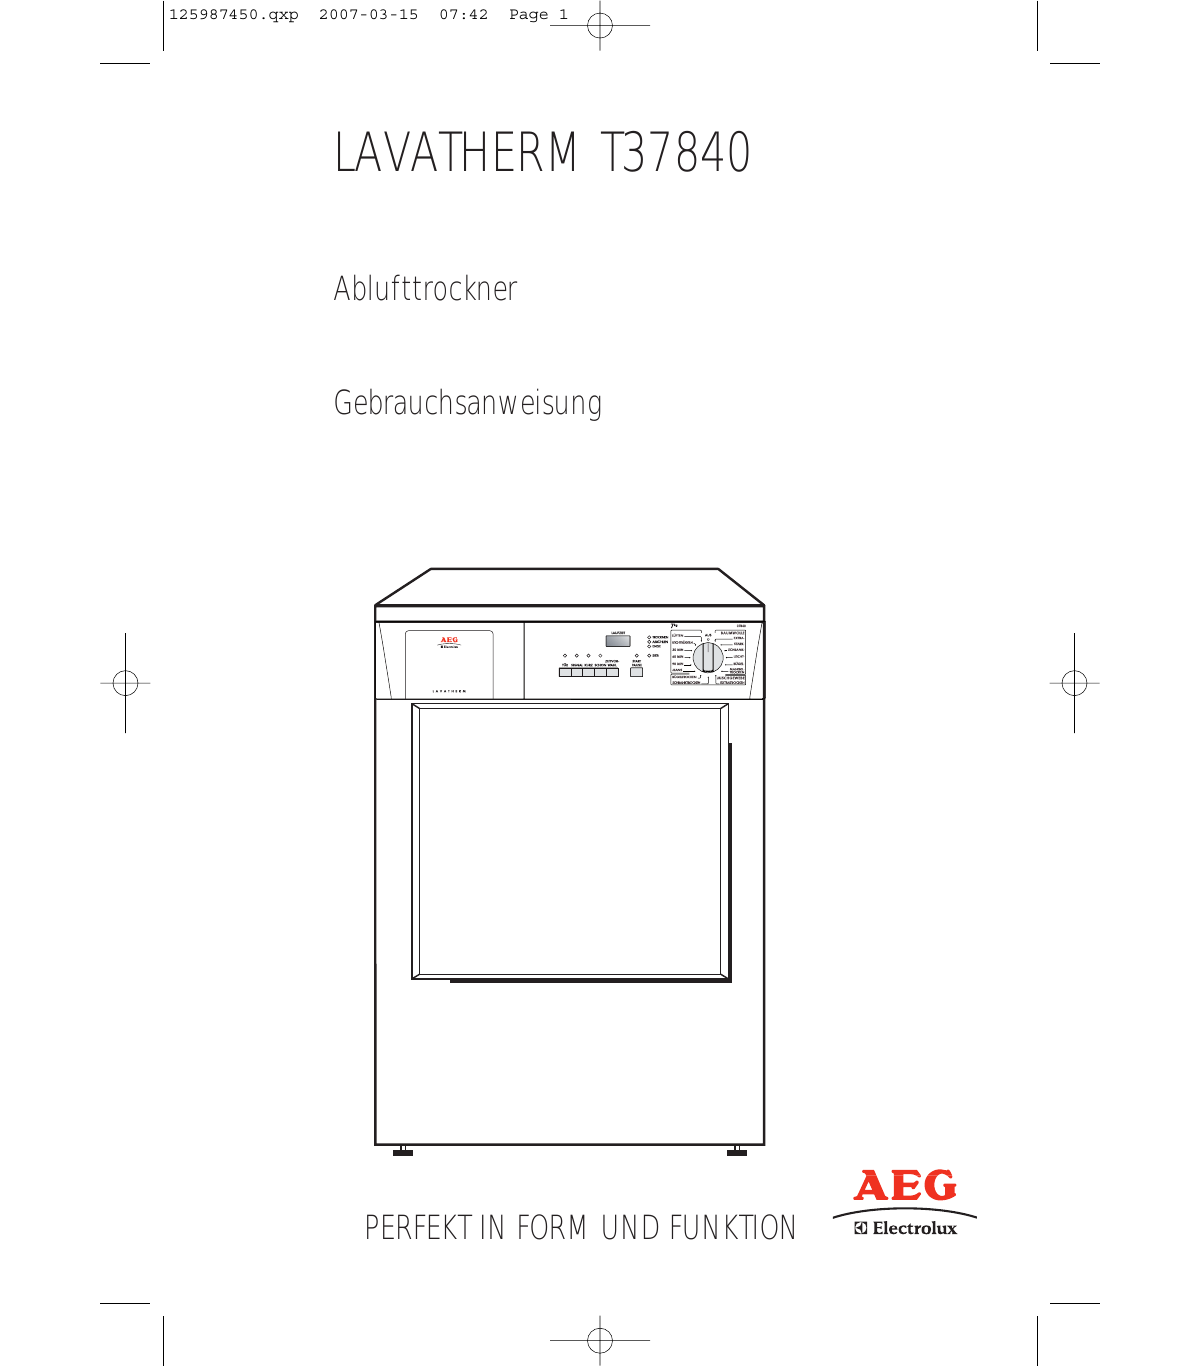 aeg electrolux lavatherm tumble dryer error codes